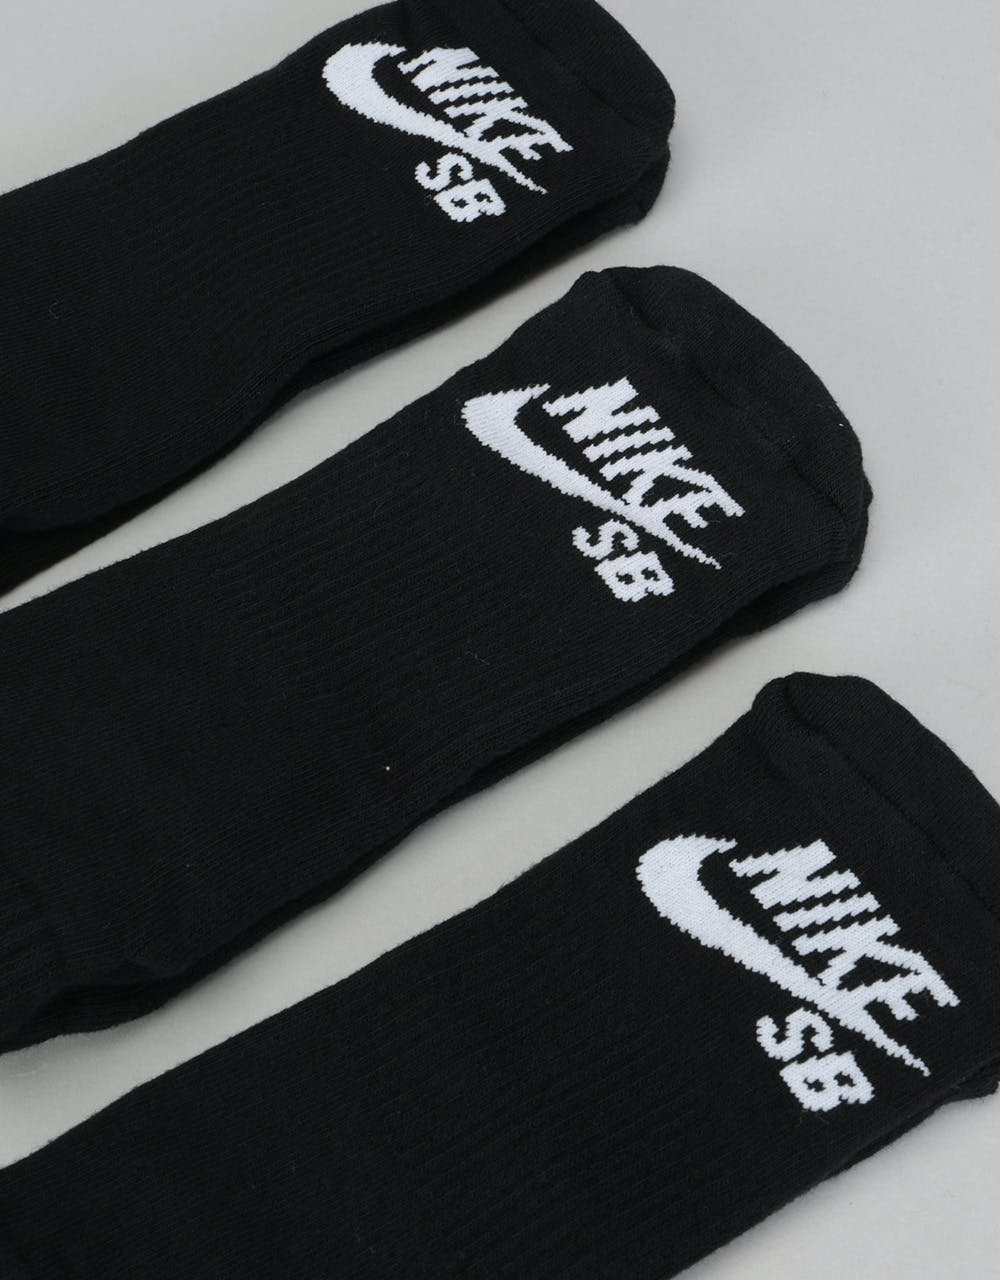 Nike SB No-Show Socks 3 Pack - Black/White